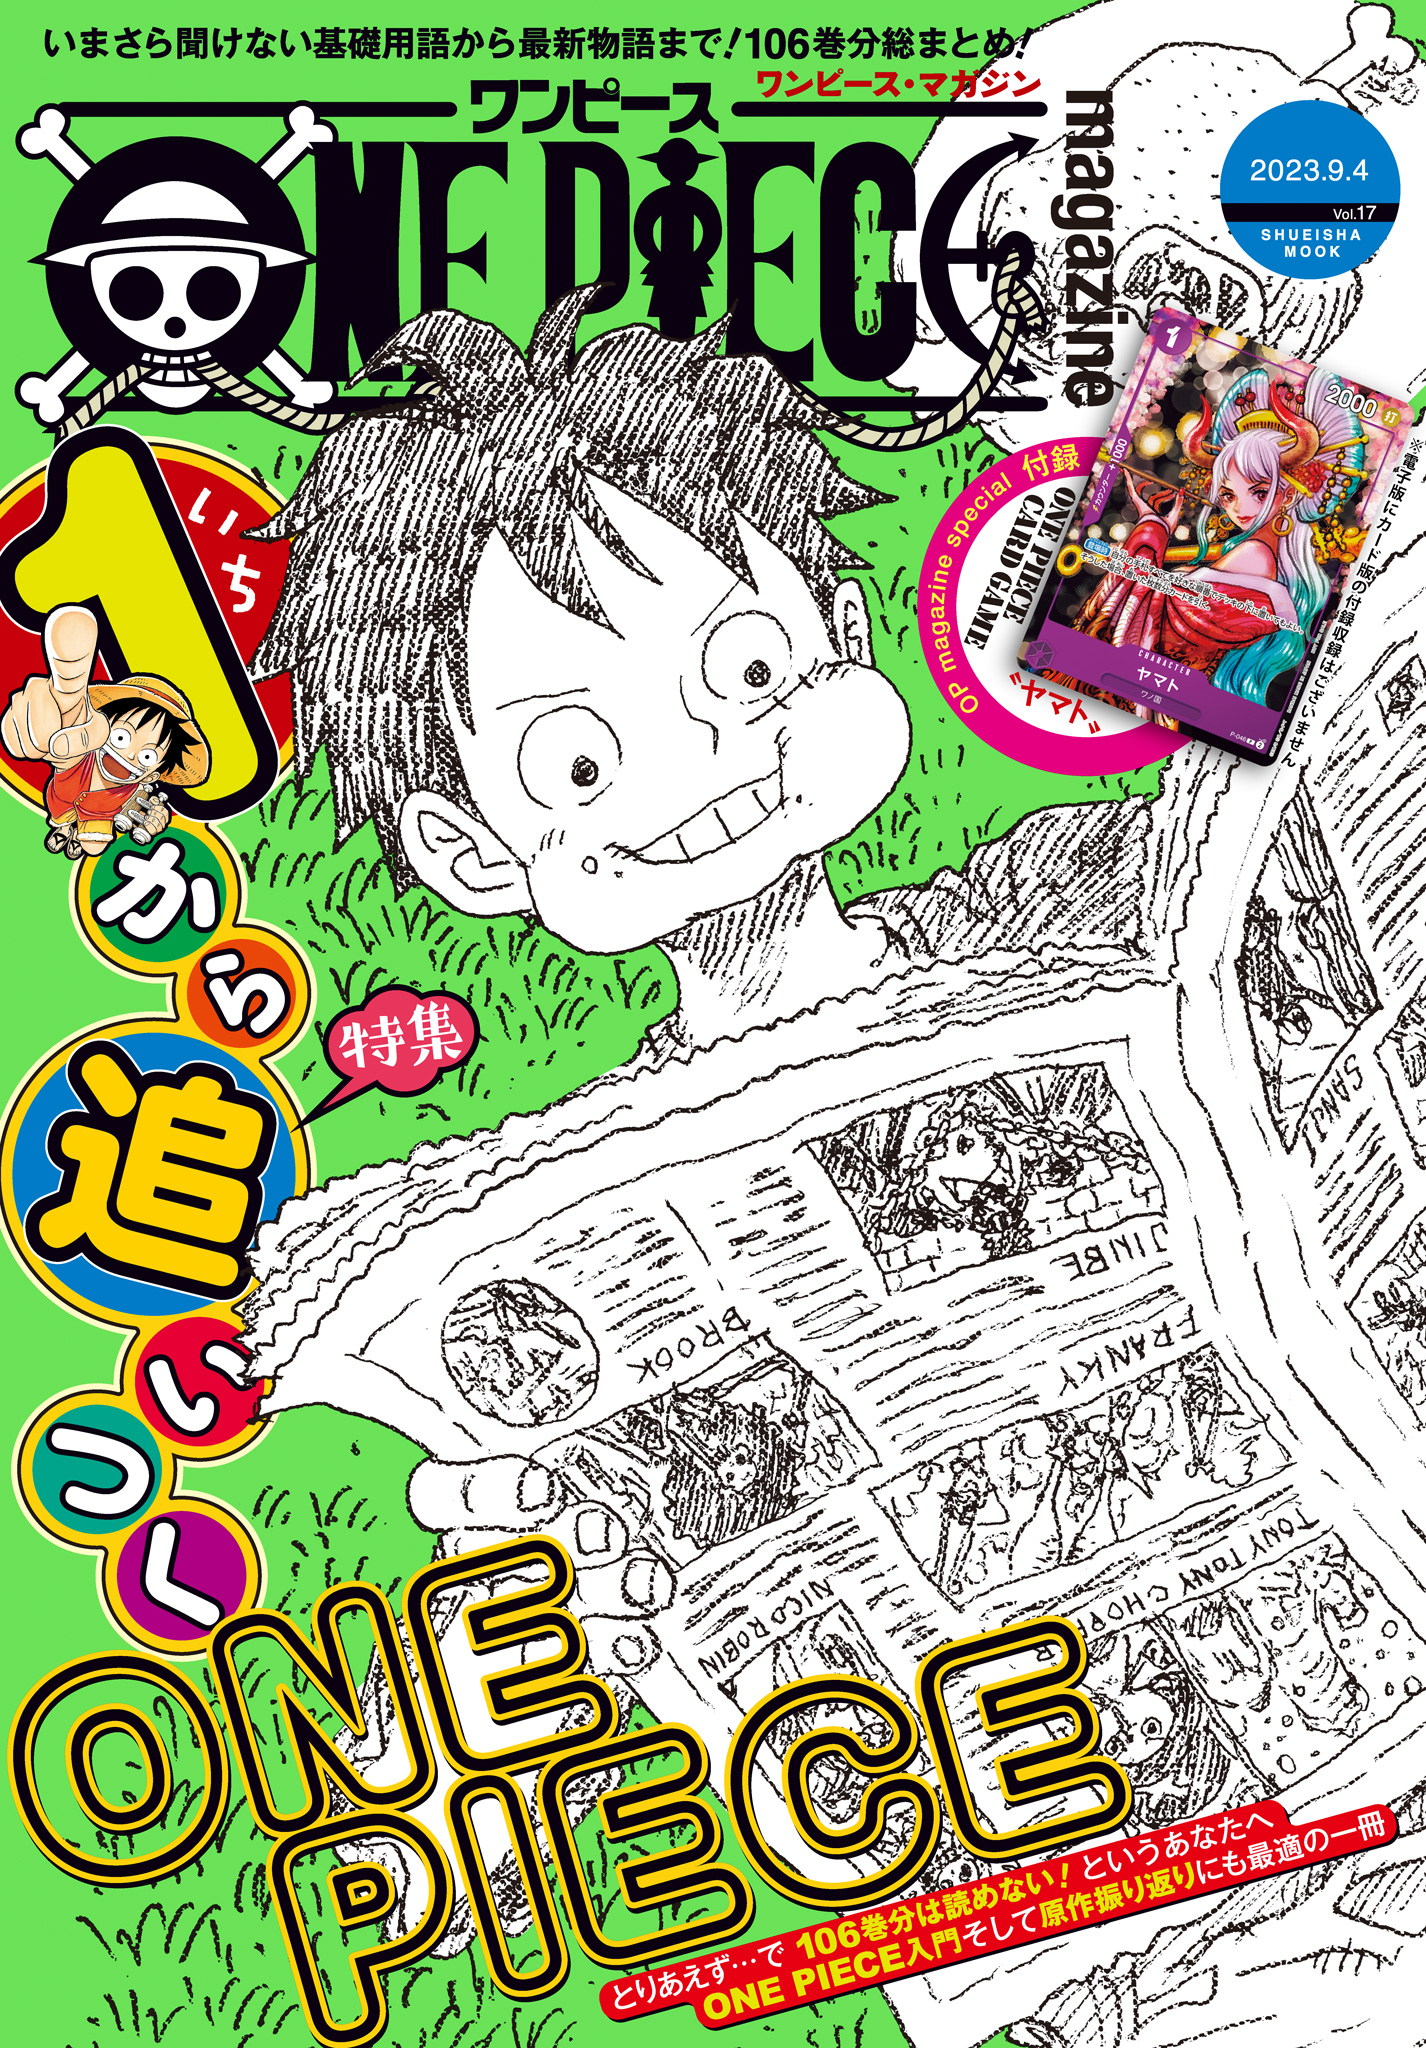 ONE PIECE magazine Vol.17(マンガ) - 電子書籍 | U-NEXT 初回600